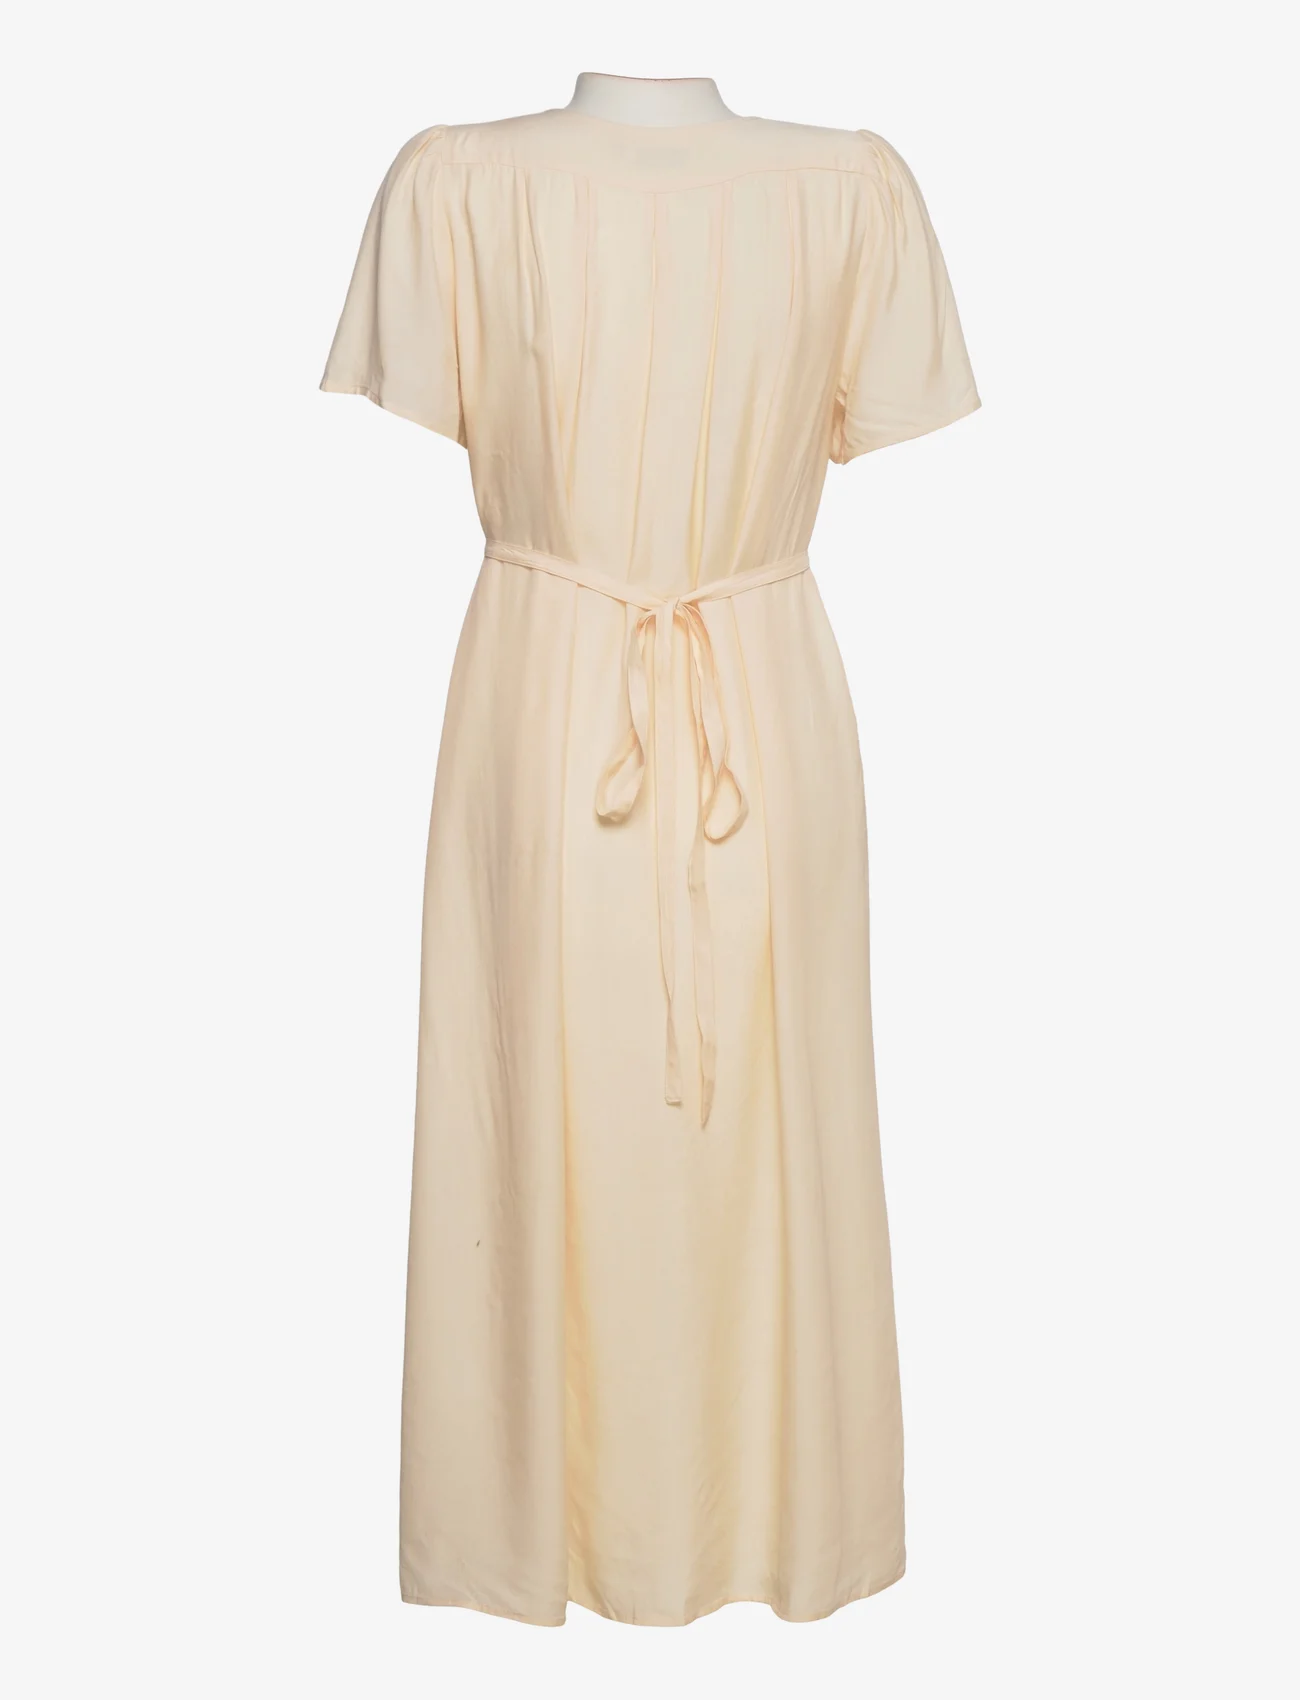 Noa Noa - Dress short sleeve - sukienki do kolan i midi - white swan - 1